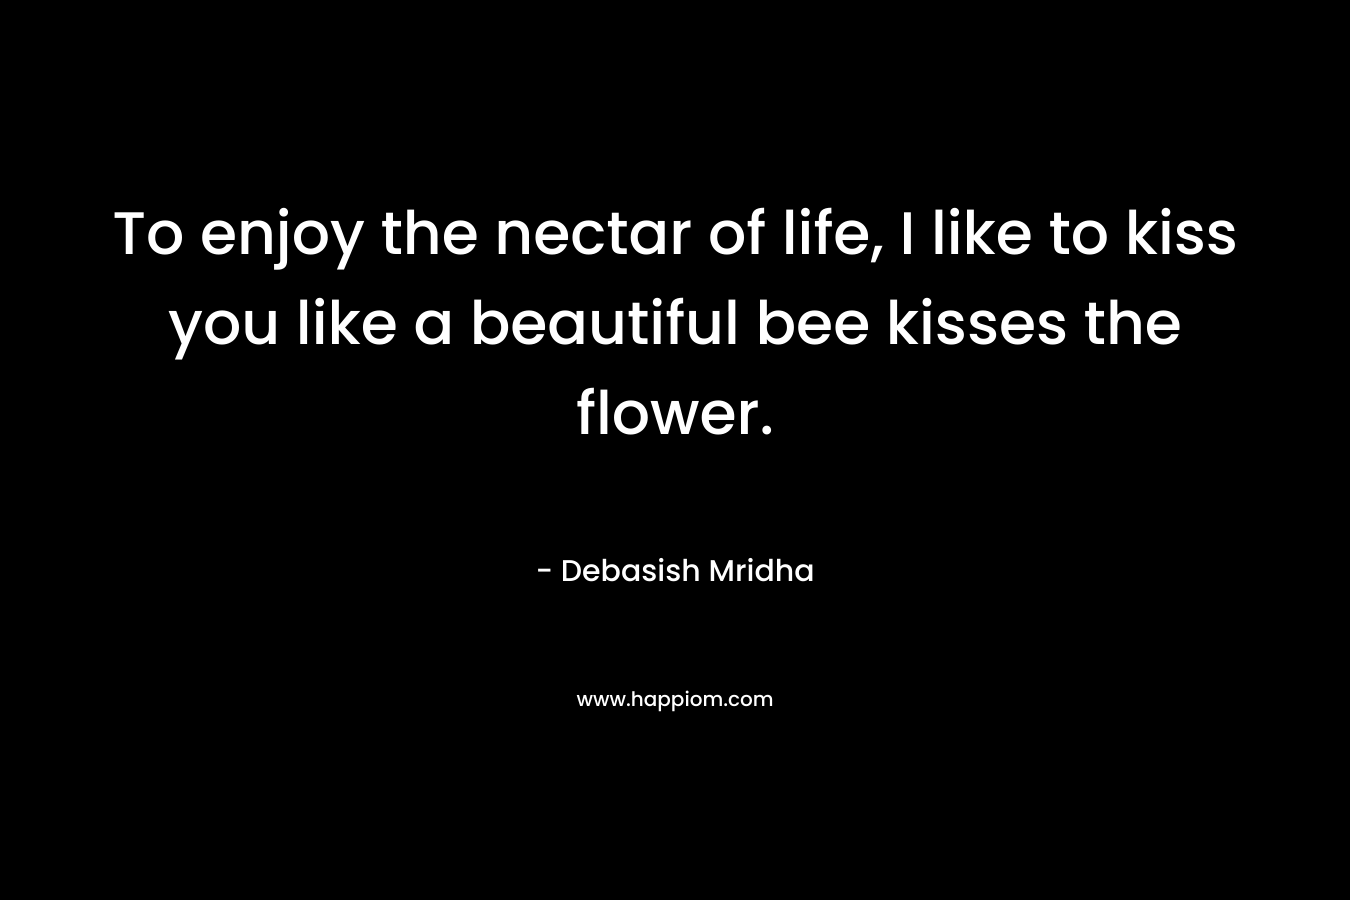 To enjoy the nectar of life, I like to kiss you like a beautiful bee kisses the flower.